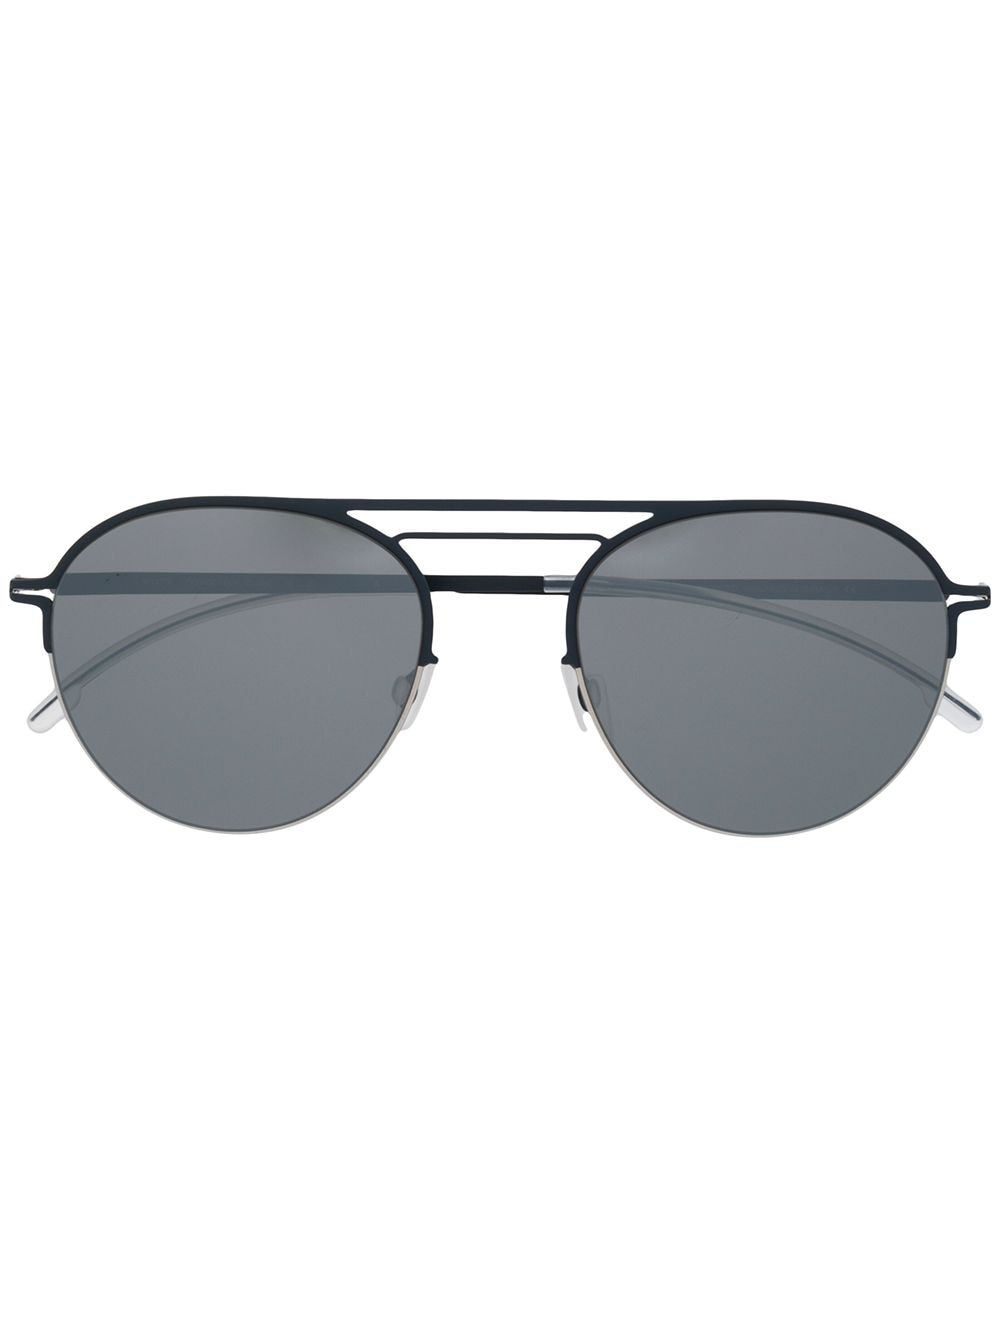 Mykita Trousero Shaped Frame Black Sunglasses - Atterley In Blue